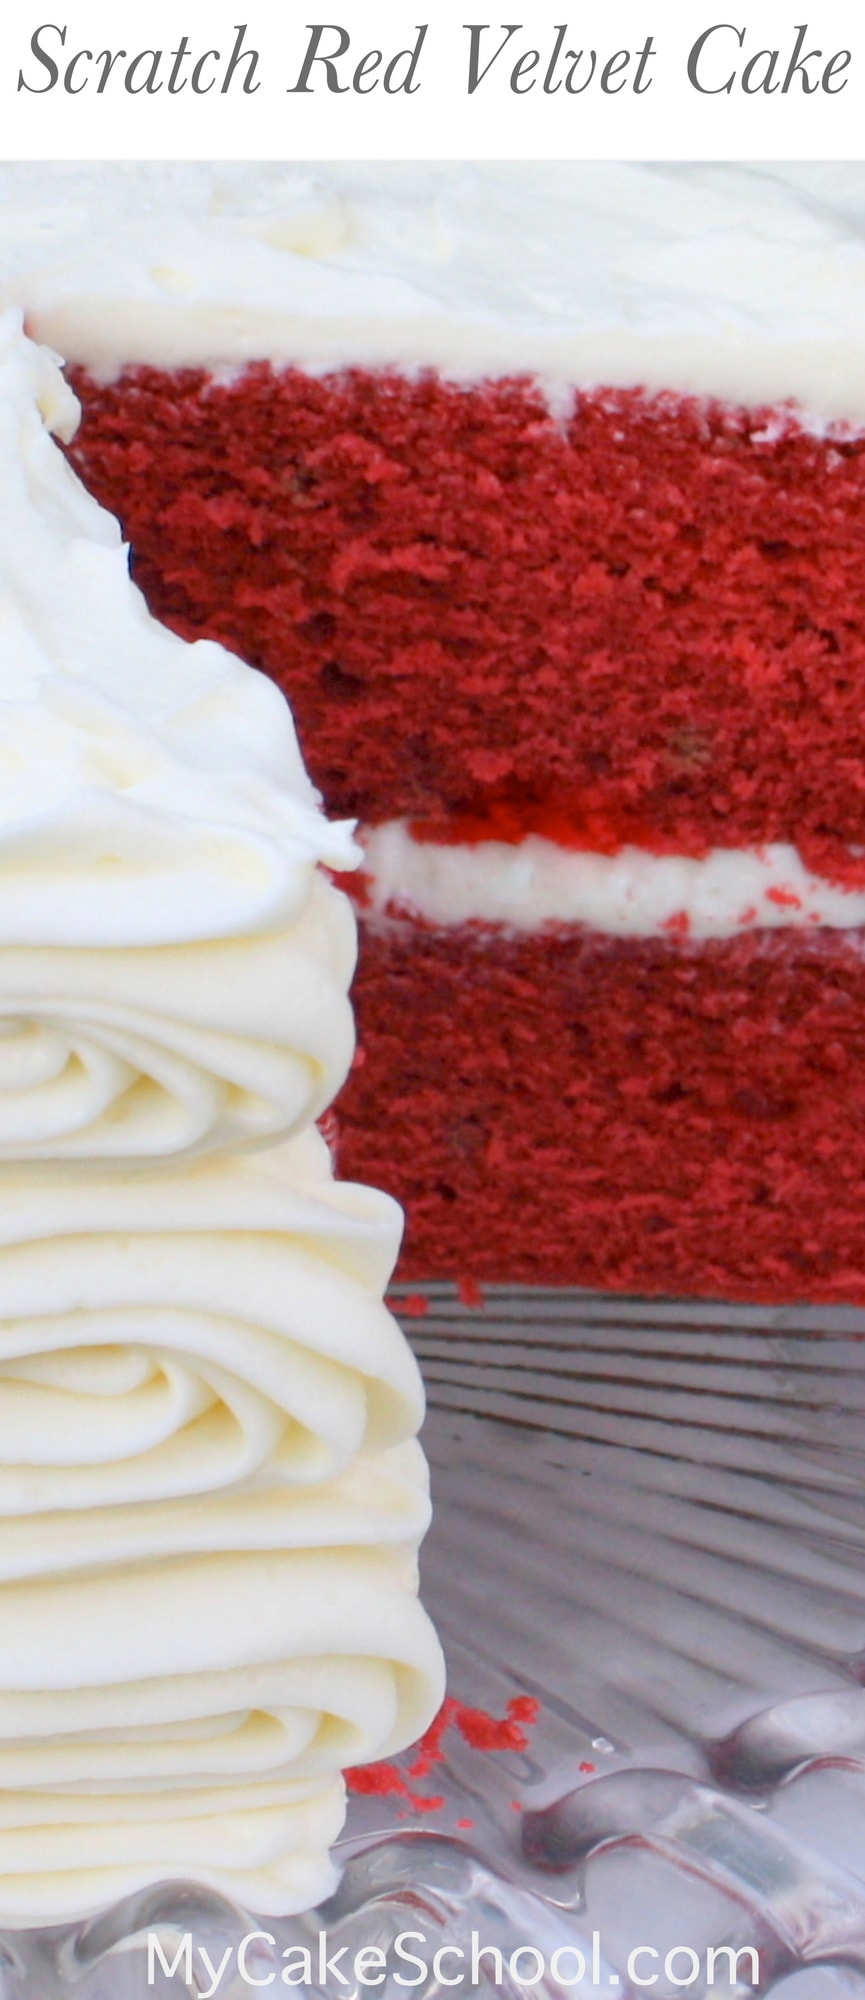 Classic Red Velvet Cake from Scratch | My Cake School